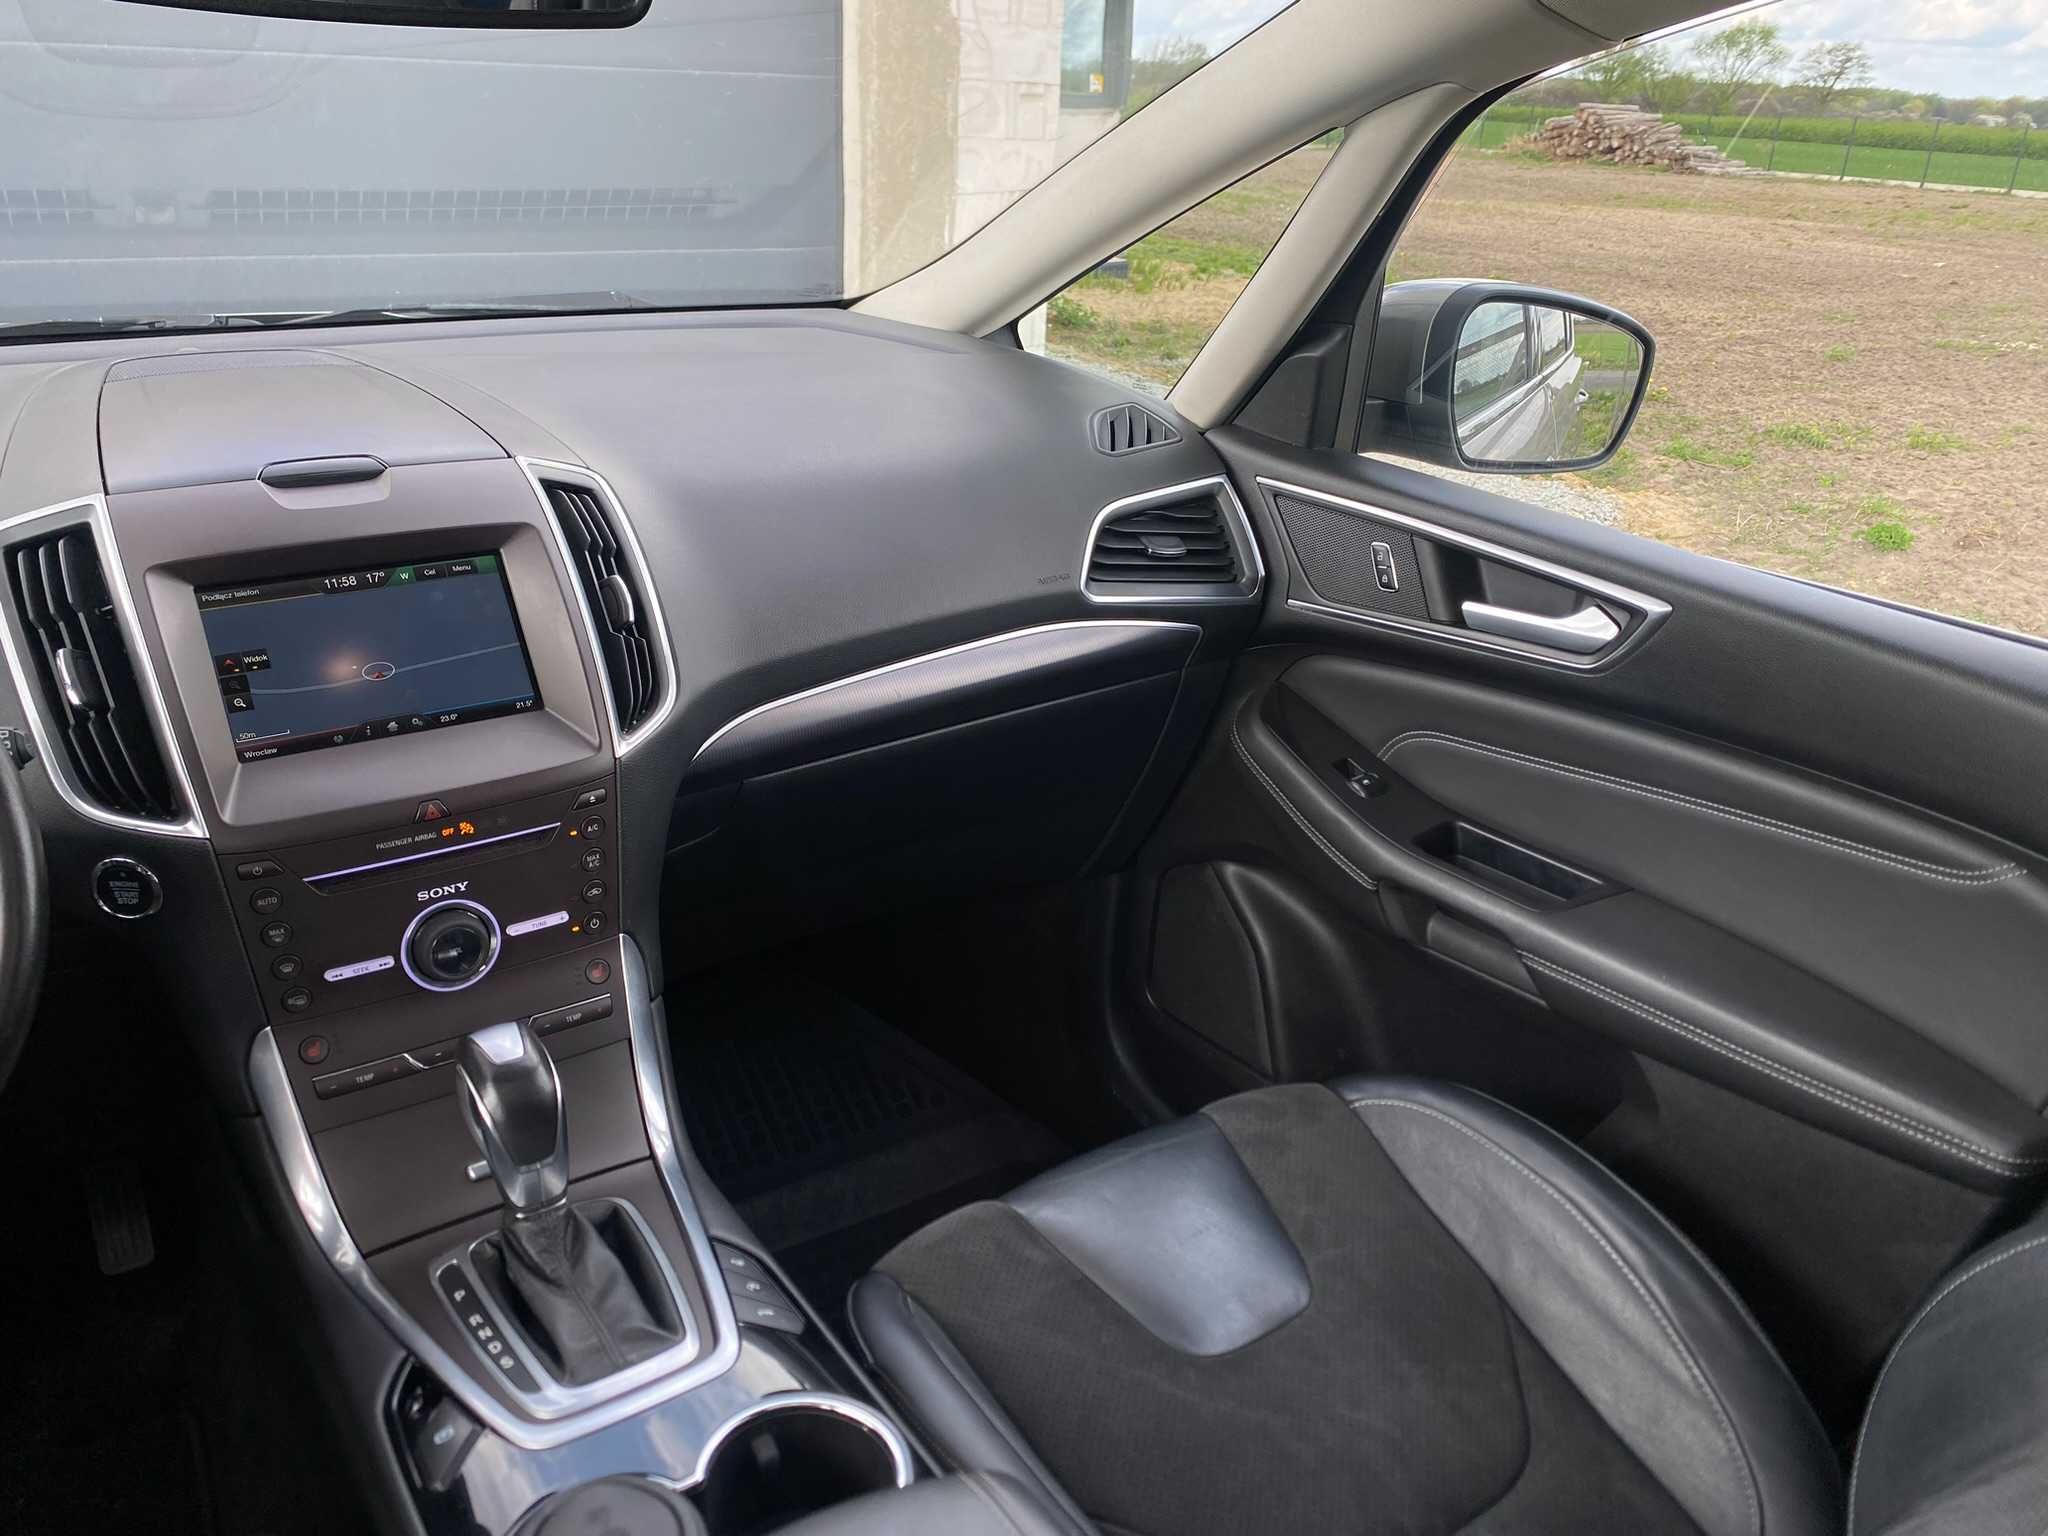 Ford S-max 2.0 Tdci HAK Titanium 4x4 AWD led panorama zamiana